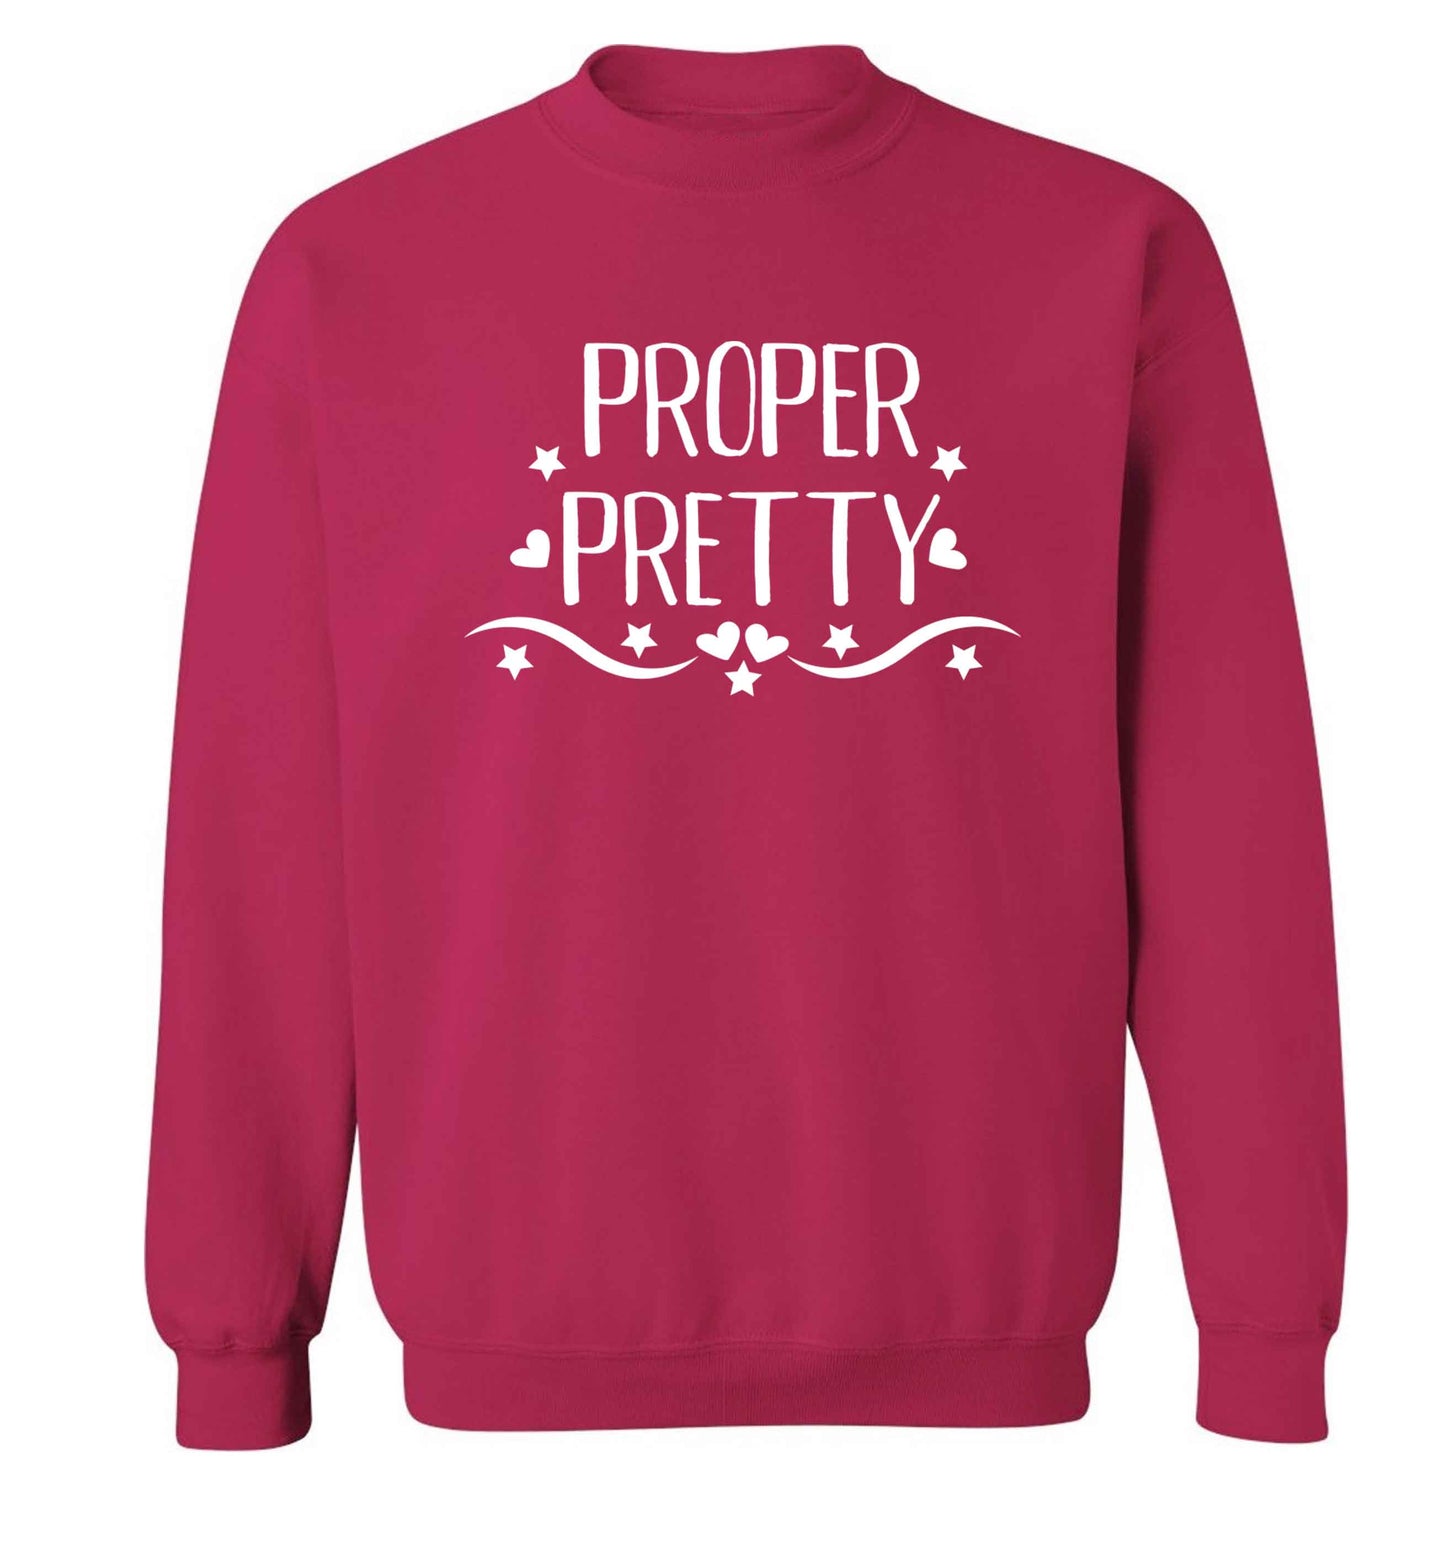 Proper pretty Adult's unisex pink Sweater 2XL